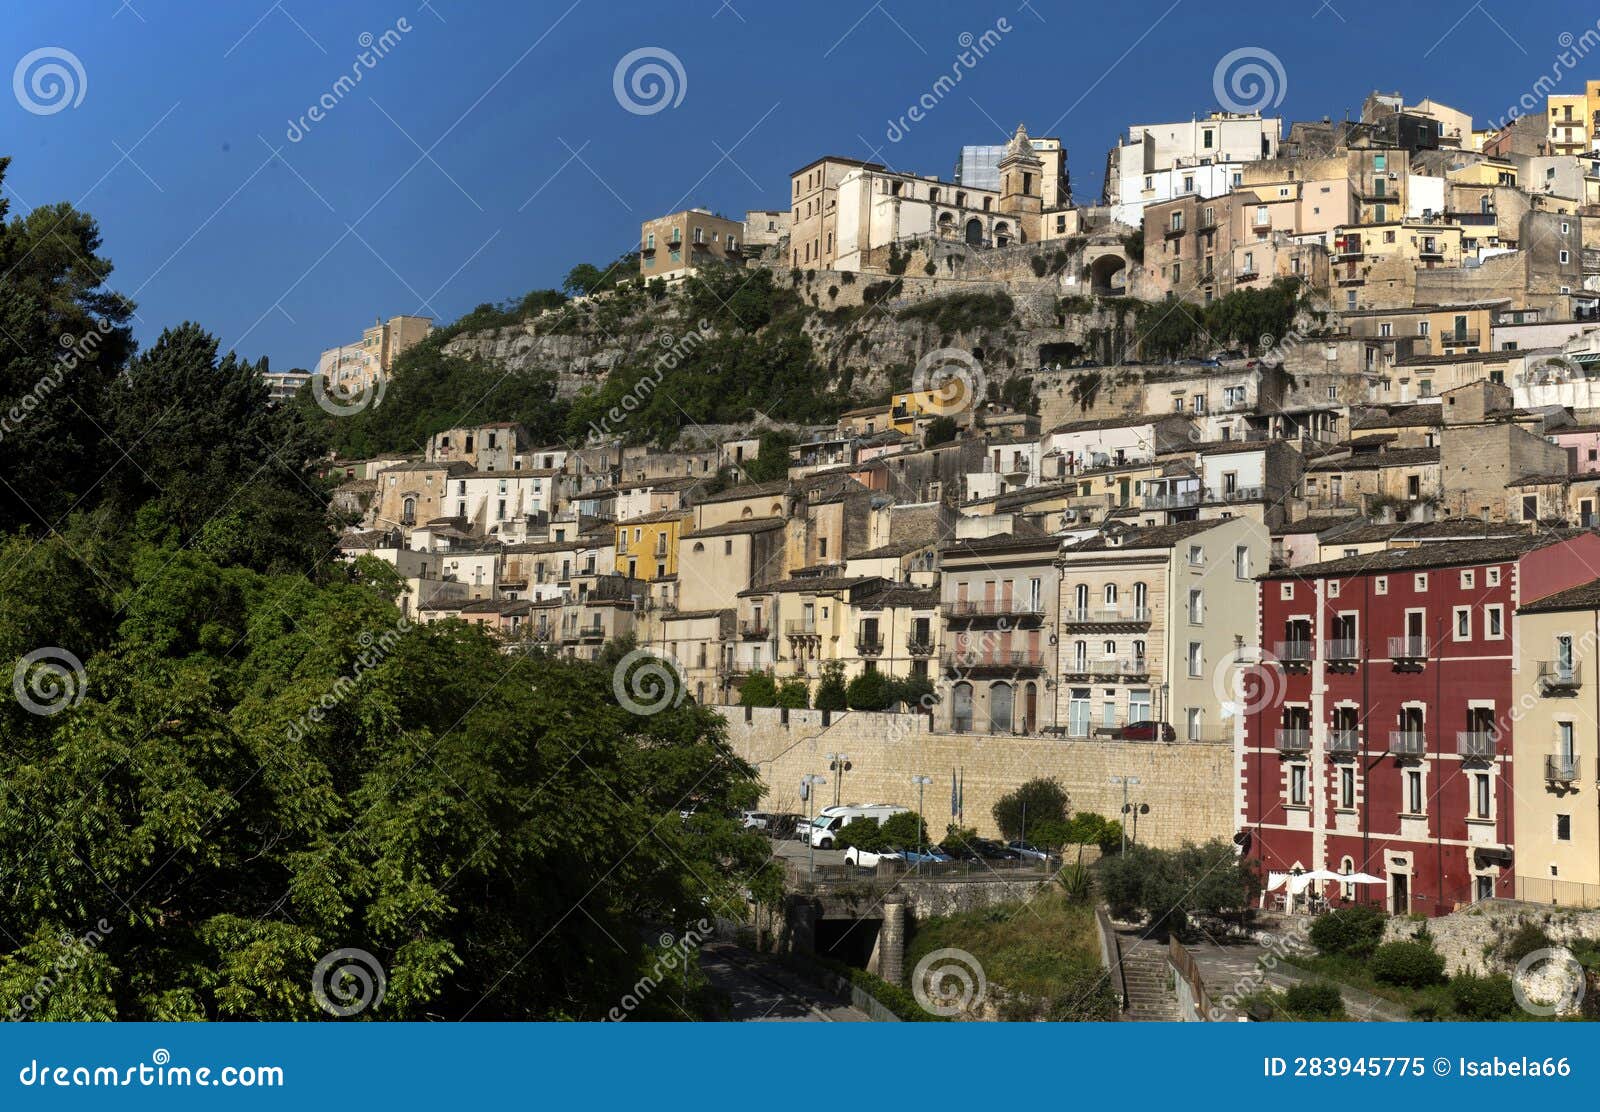 panorama of baroque city upper ragusa, sicilia, italy